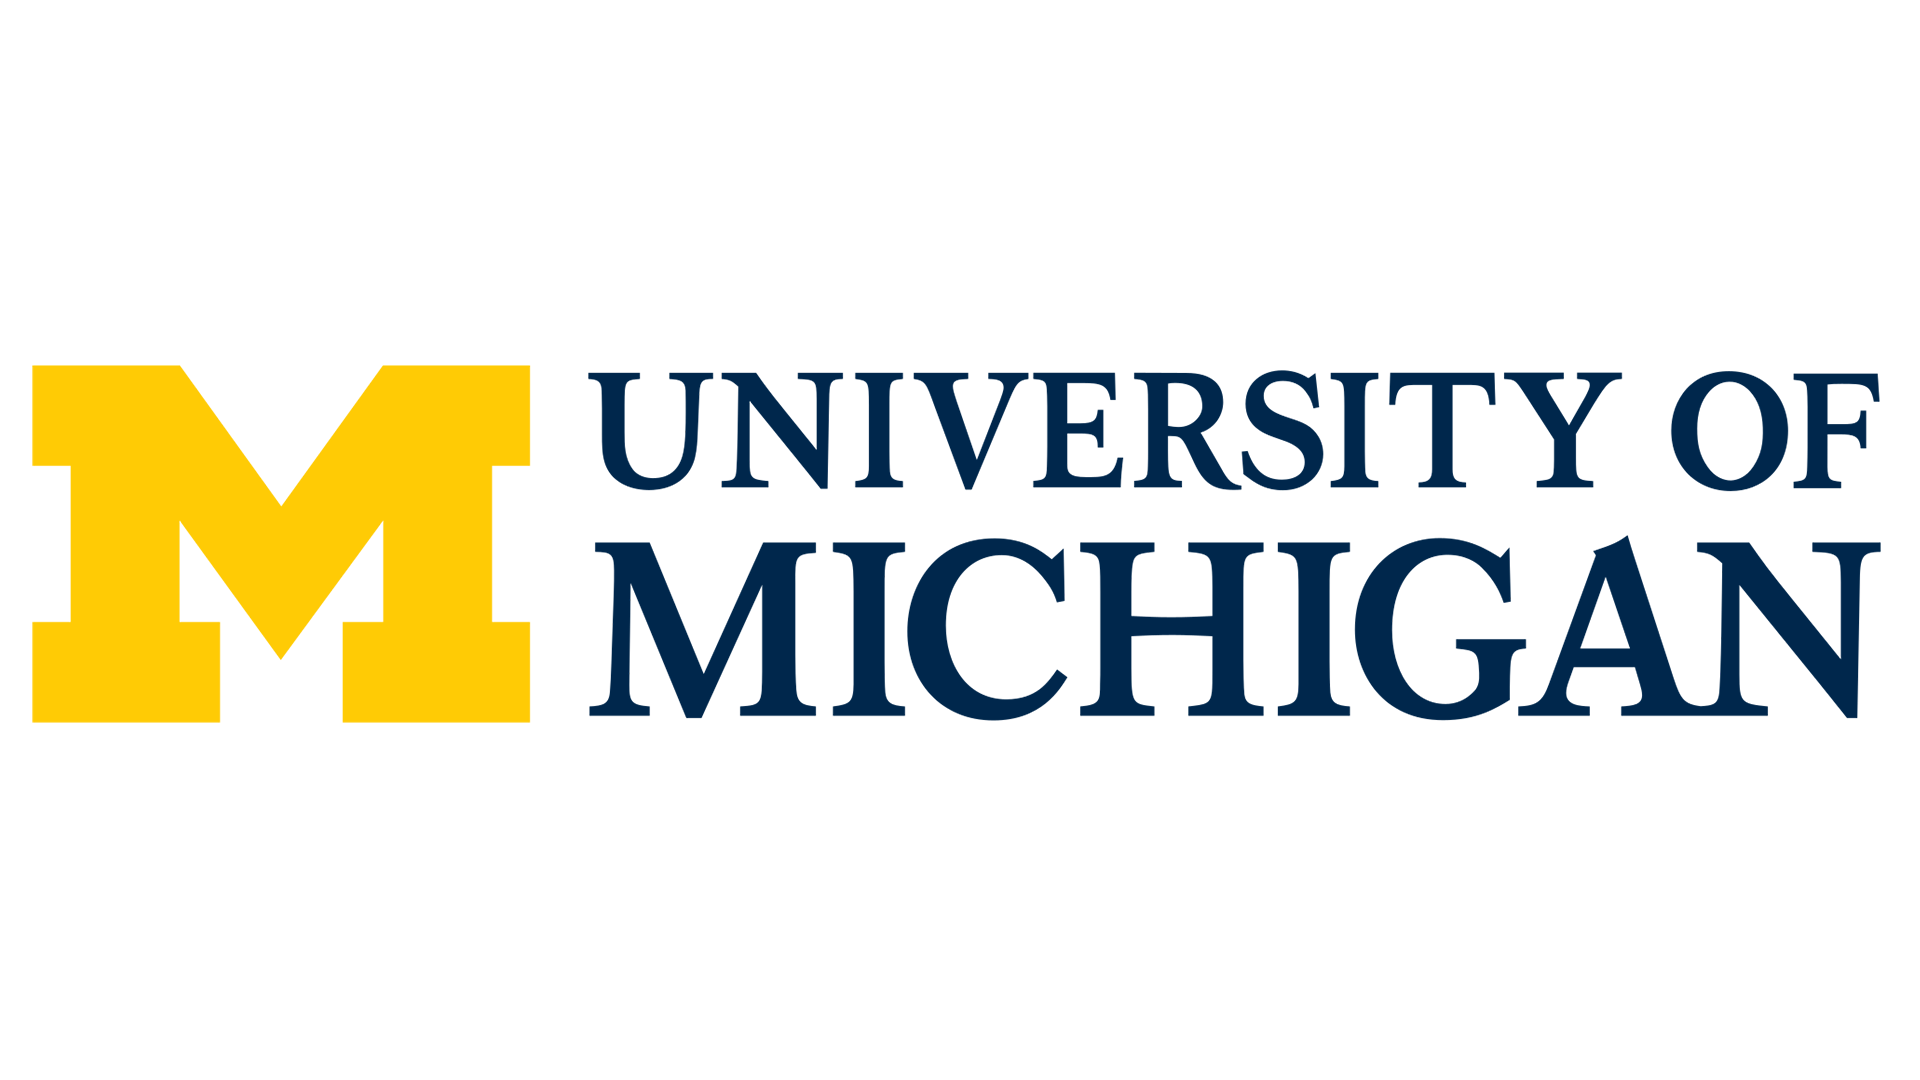 Universidade de Michigan